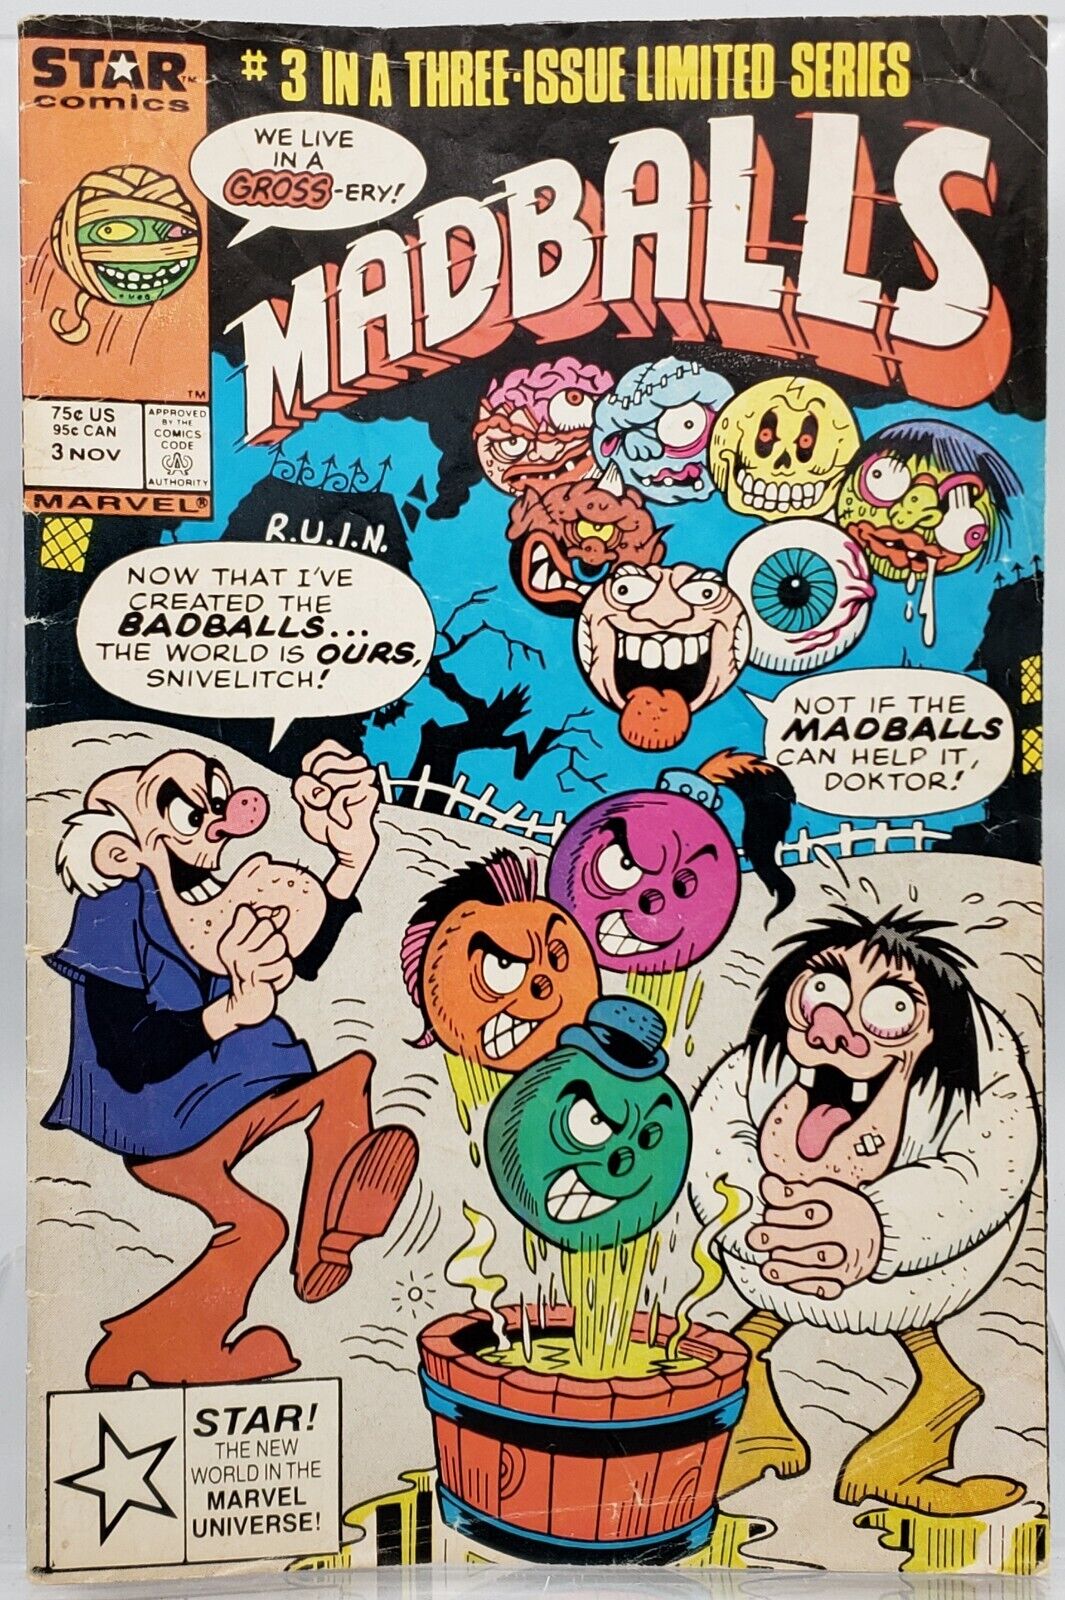 Madballs #3 Star Comic Marvel Comic Book 1986 Limited Series Badballs Snivelitch